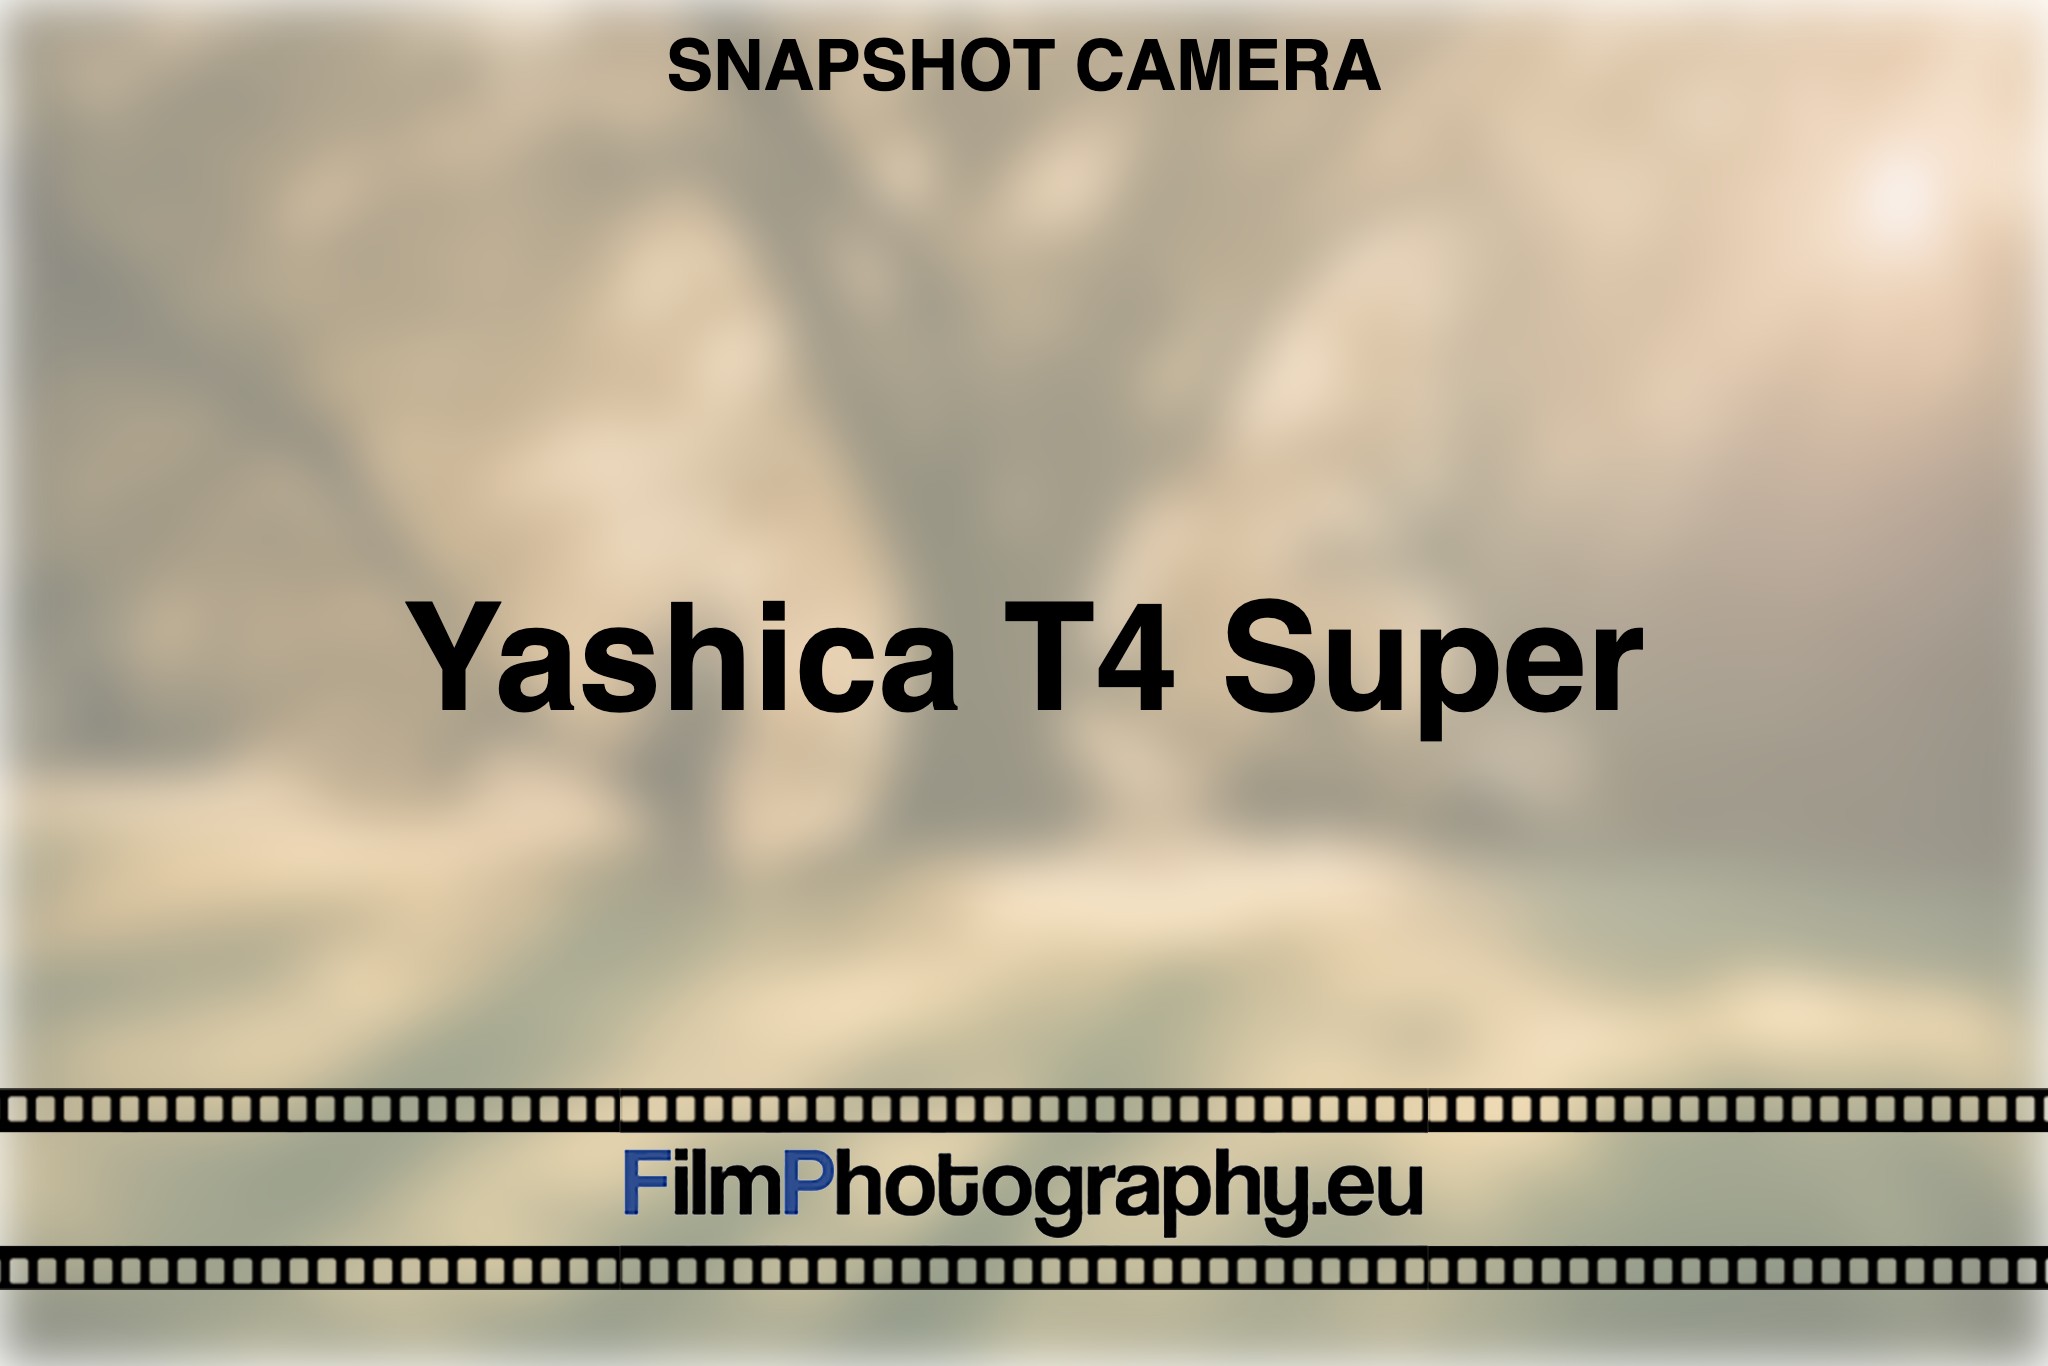 yashica-t4-super-snapshot-camera-bnv